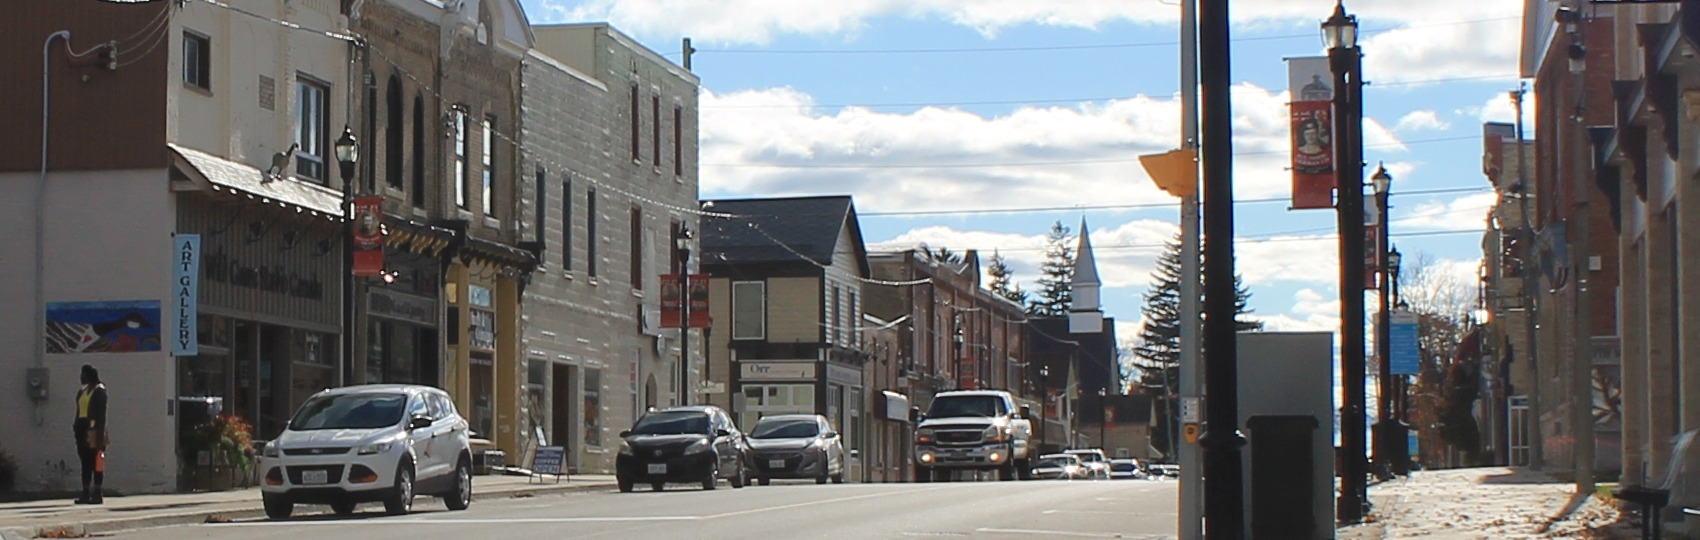 Blyth Main Street